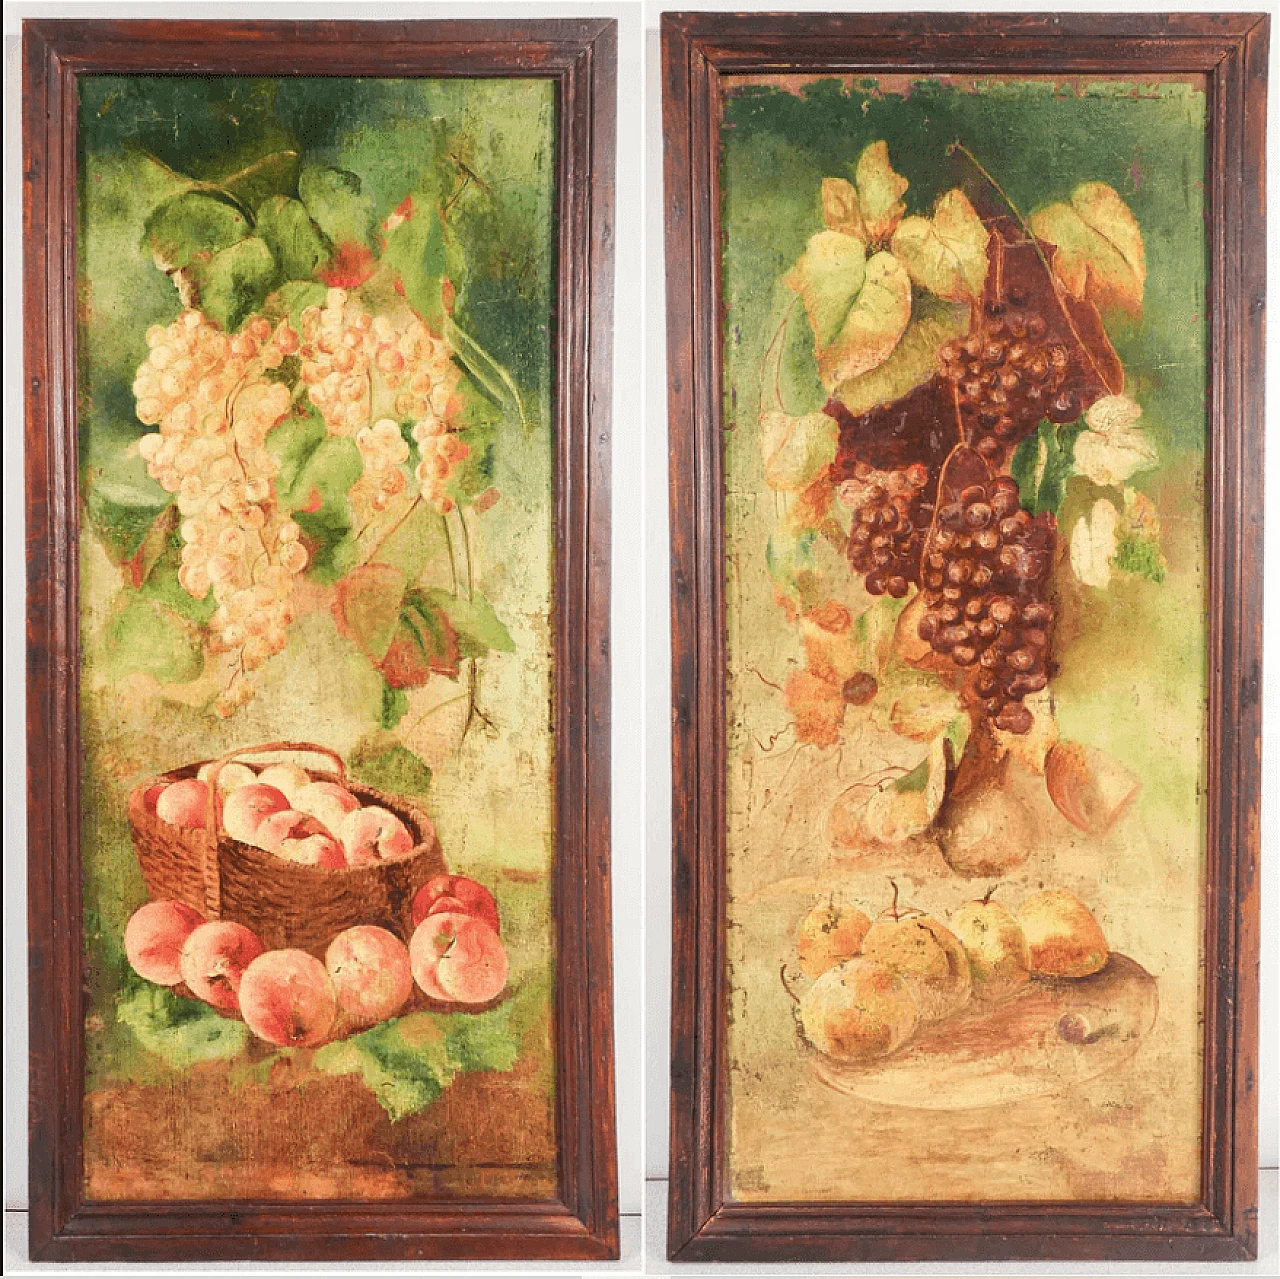 Pair of still lifes, oil on panel, mid-19th century 1